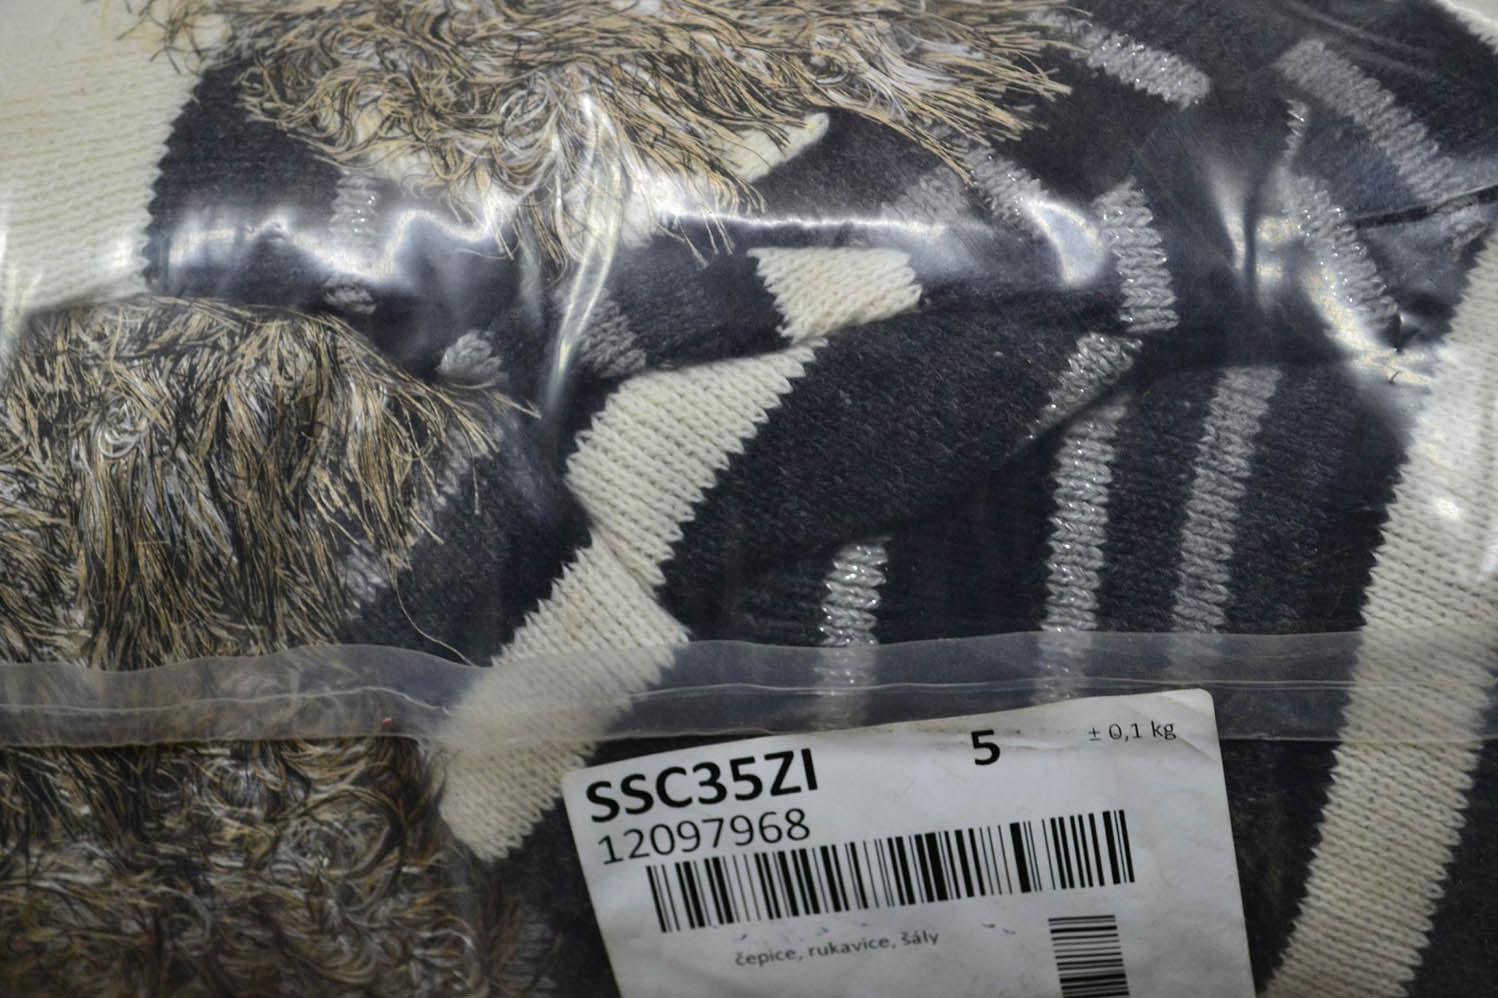 SSC35ZI Шапки,перчатки,шарфы; код мешка 12097968